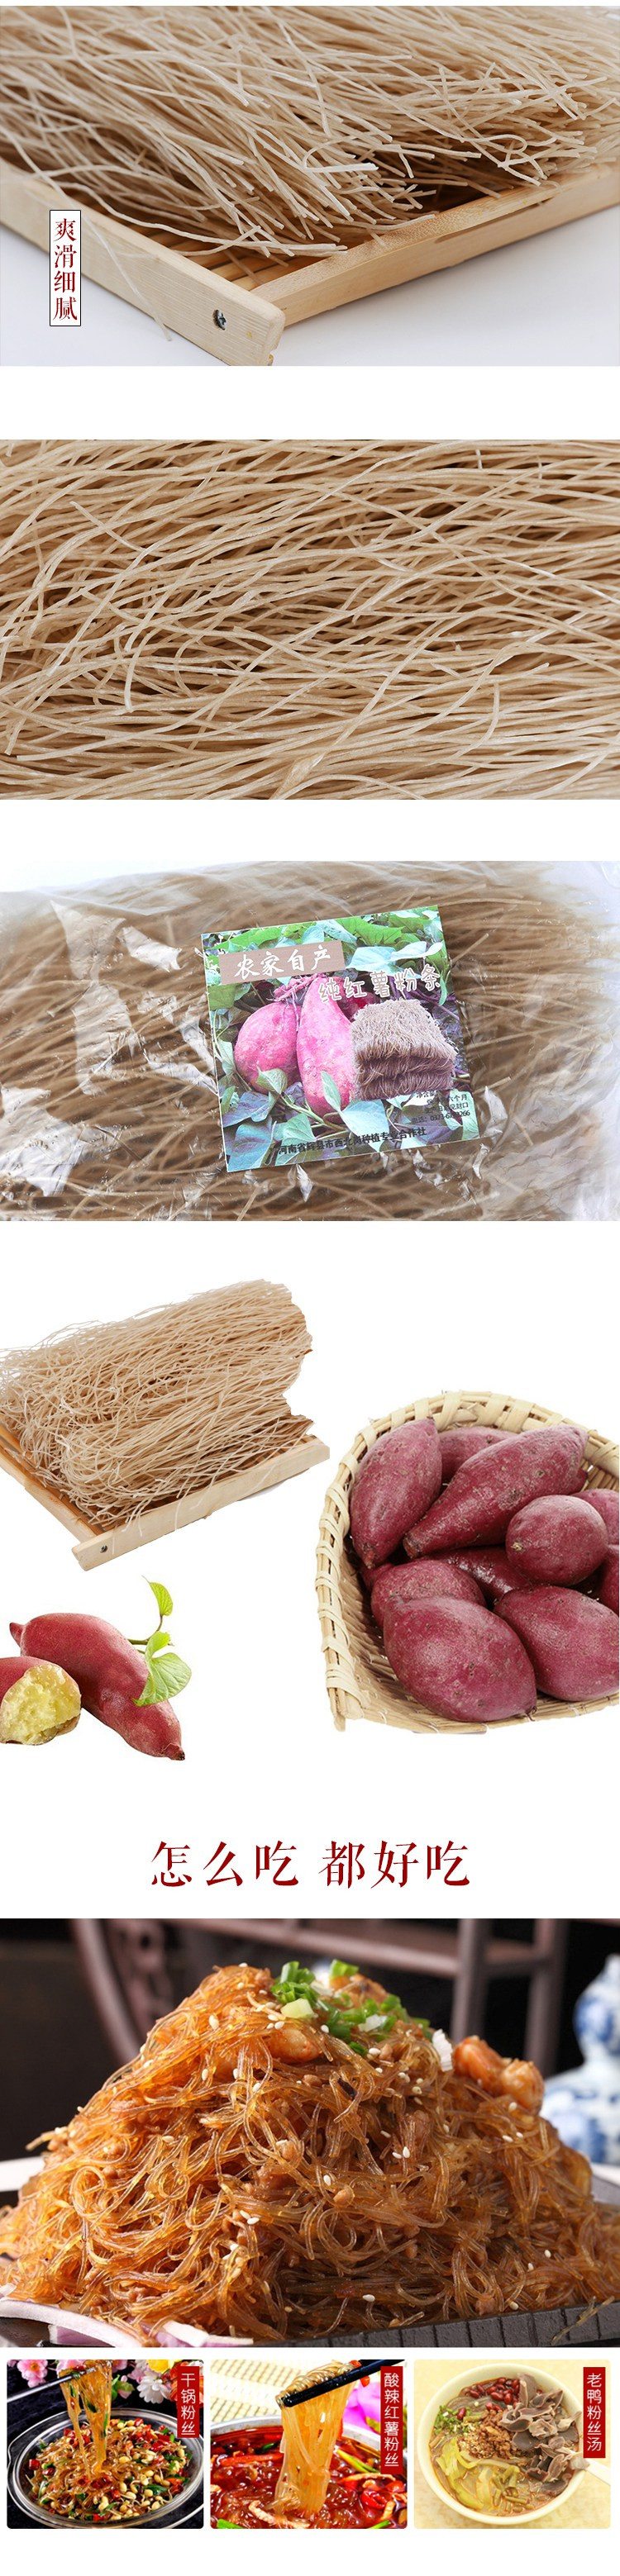 DL农家自产 南太行红薯粉条230克 红薯粉丝苕粉粗粉条